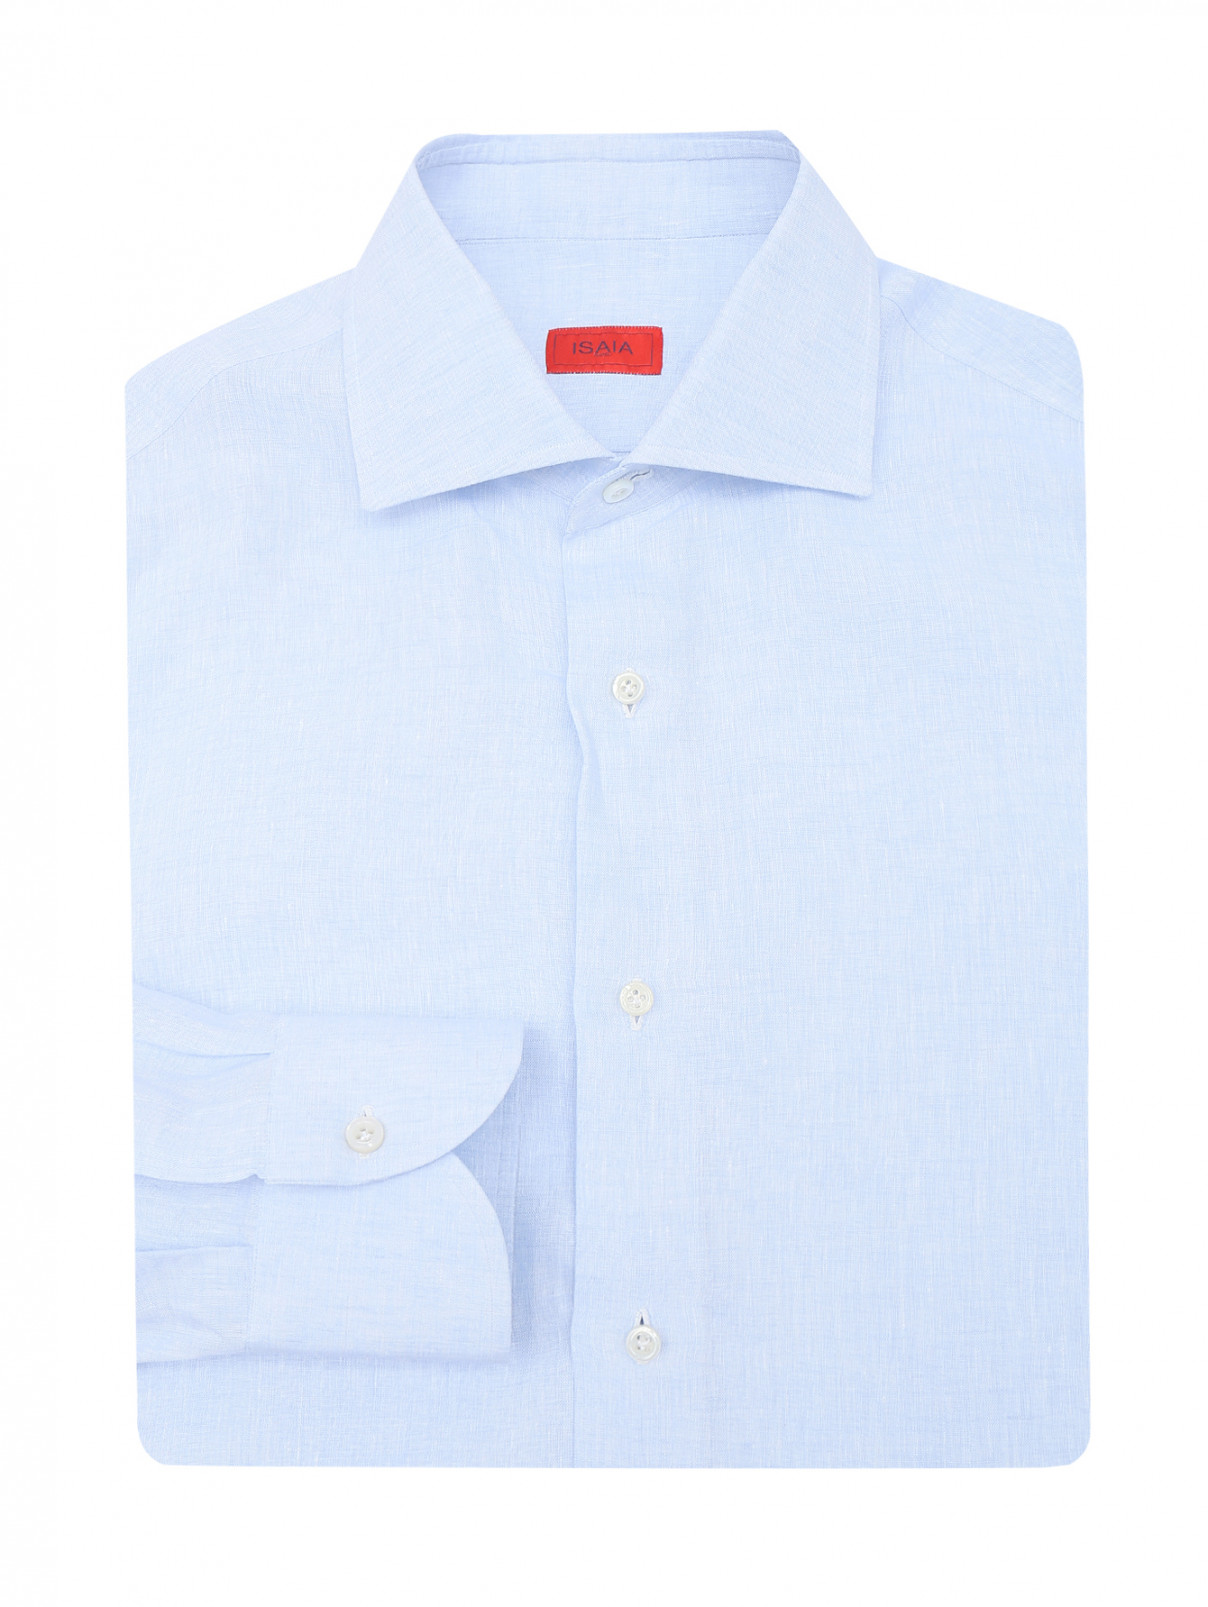 Рубашка изо льна на пуговицах Isaia  –  Общий вид  – Цвет:  Синий